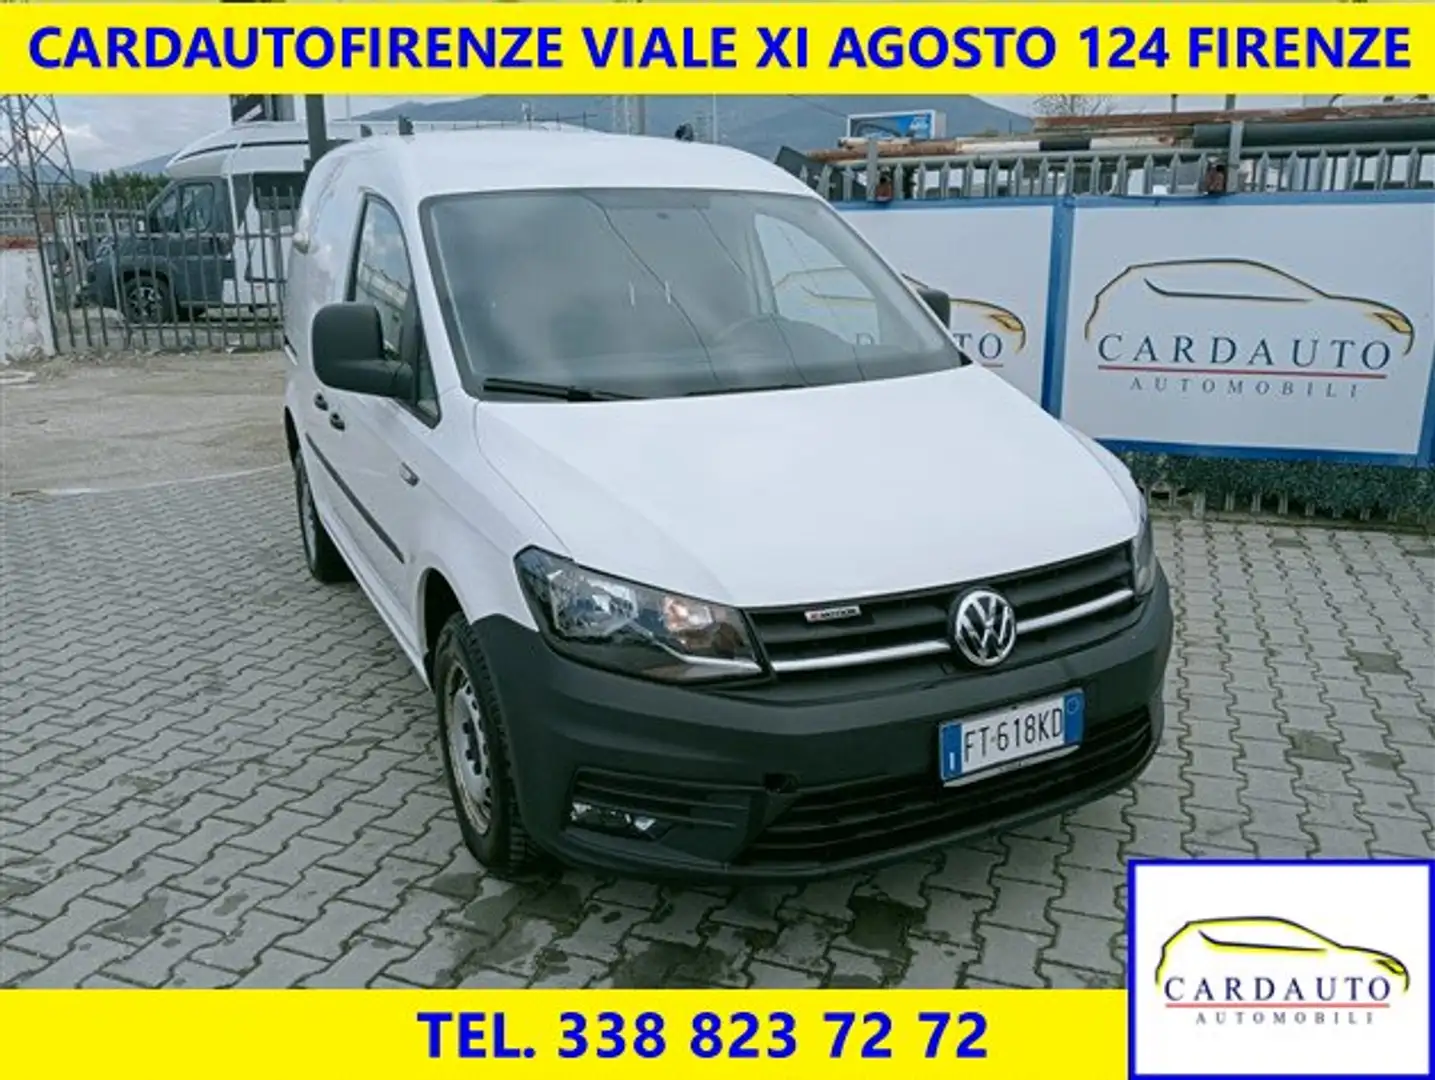 Volkswagen Caddy € 13490+ IVA CADDY 4X4 122 CV ANNO 2018 Bianco - 1